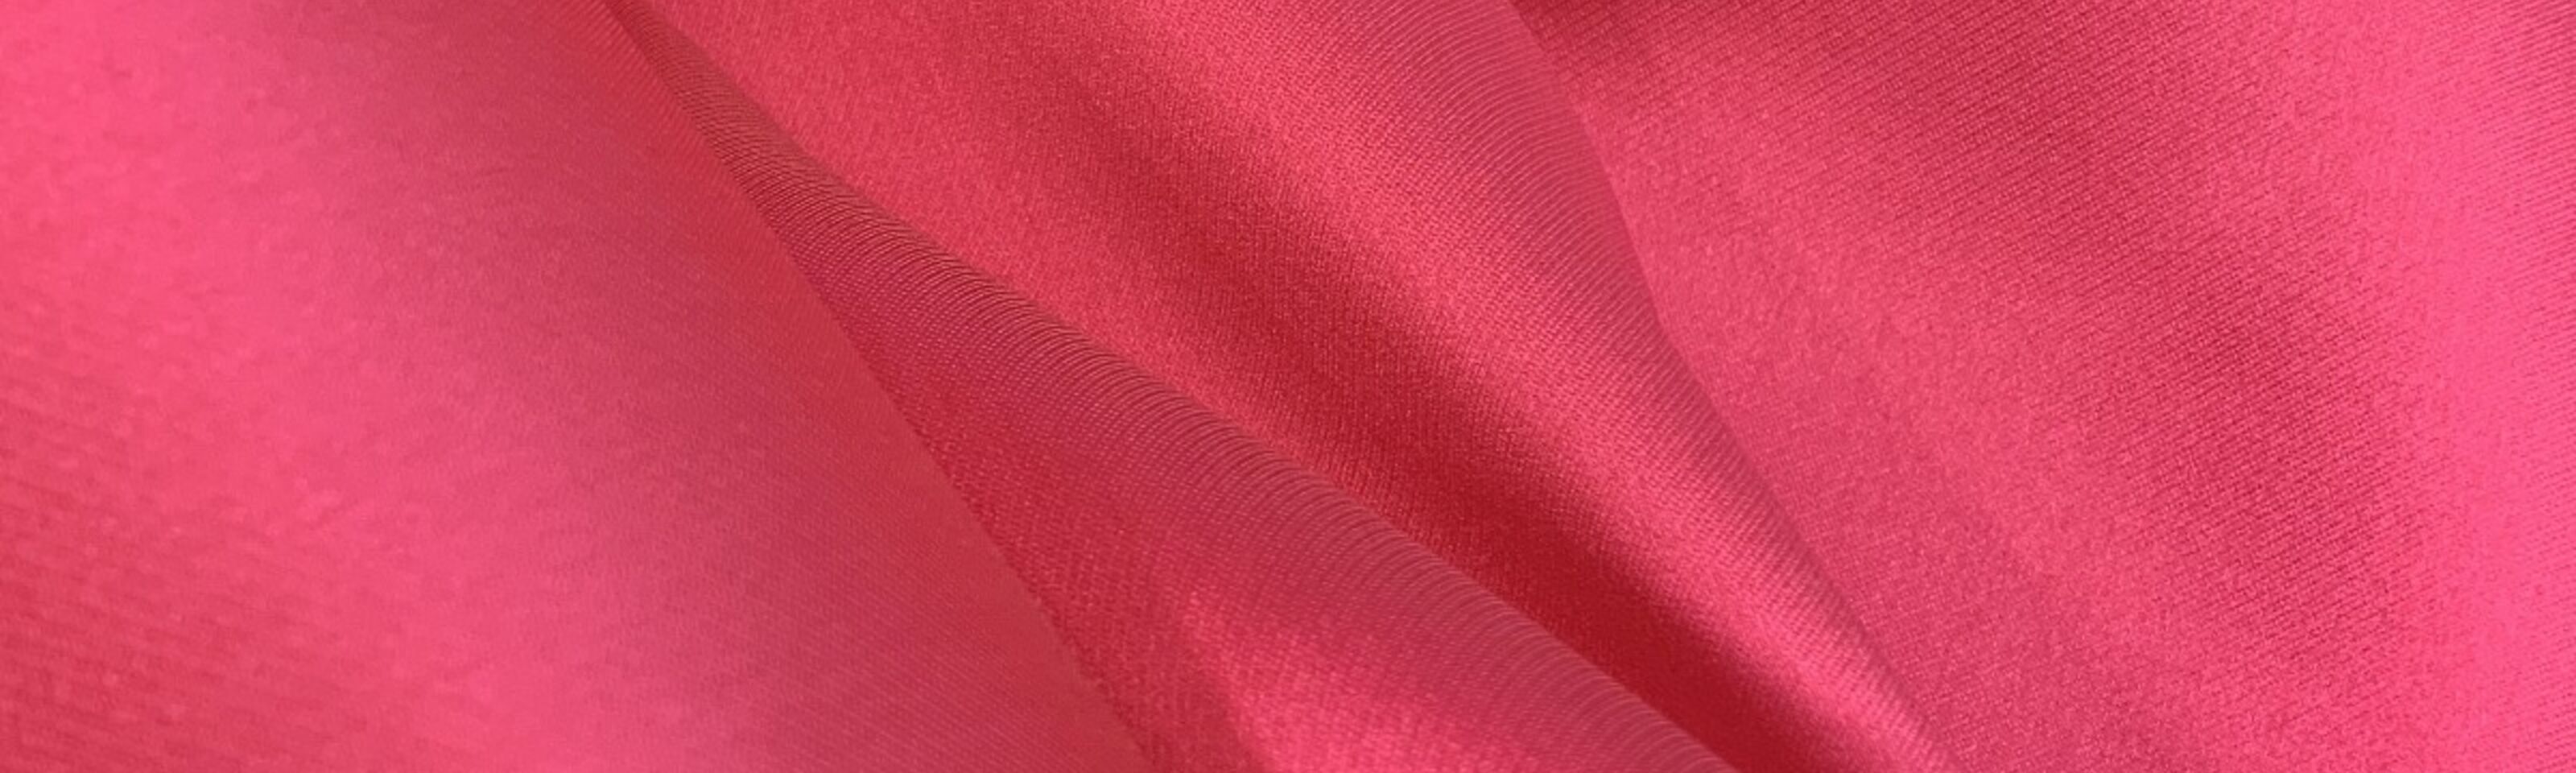 A Million Dollars - Pink Satin Dress Fabric - Fold